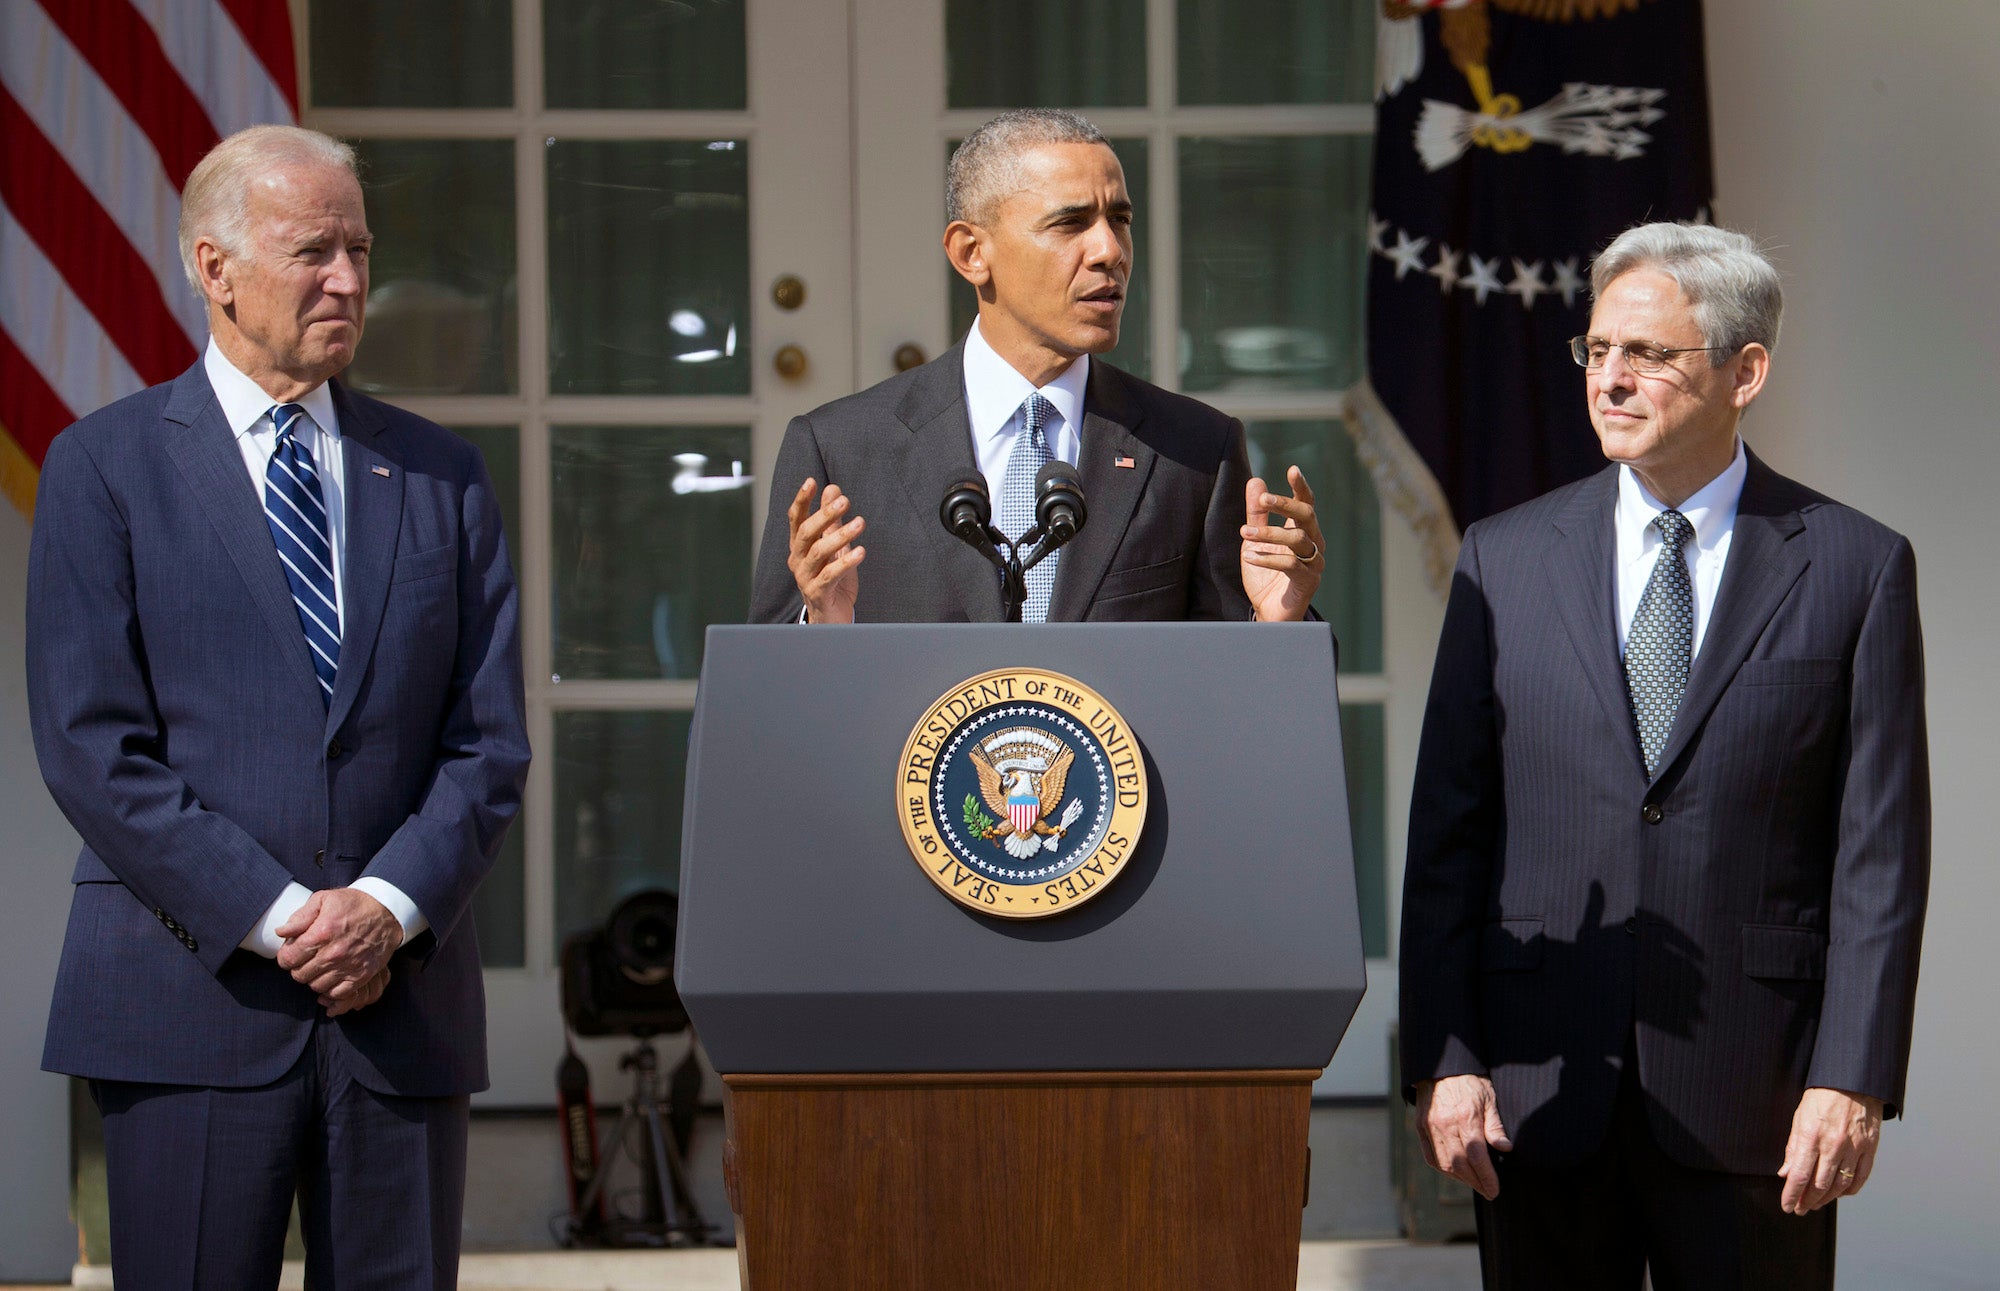 President Obama nominates Judge Merrick Garland to the Supreme Court.